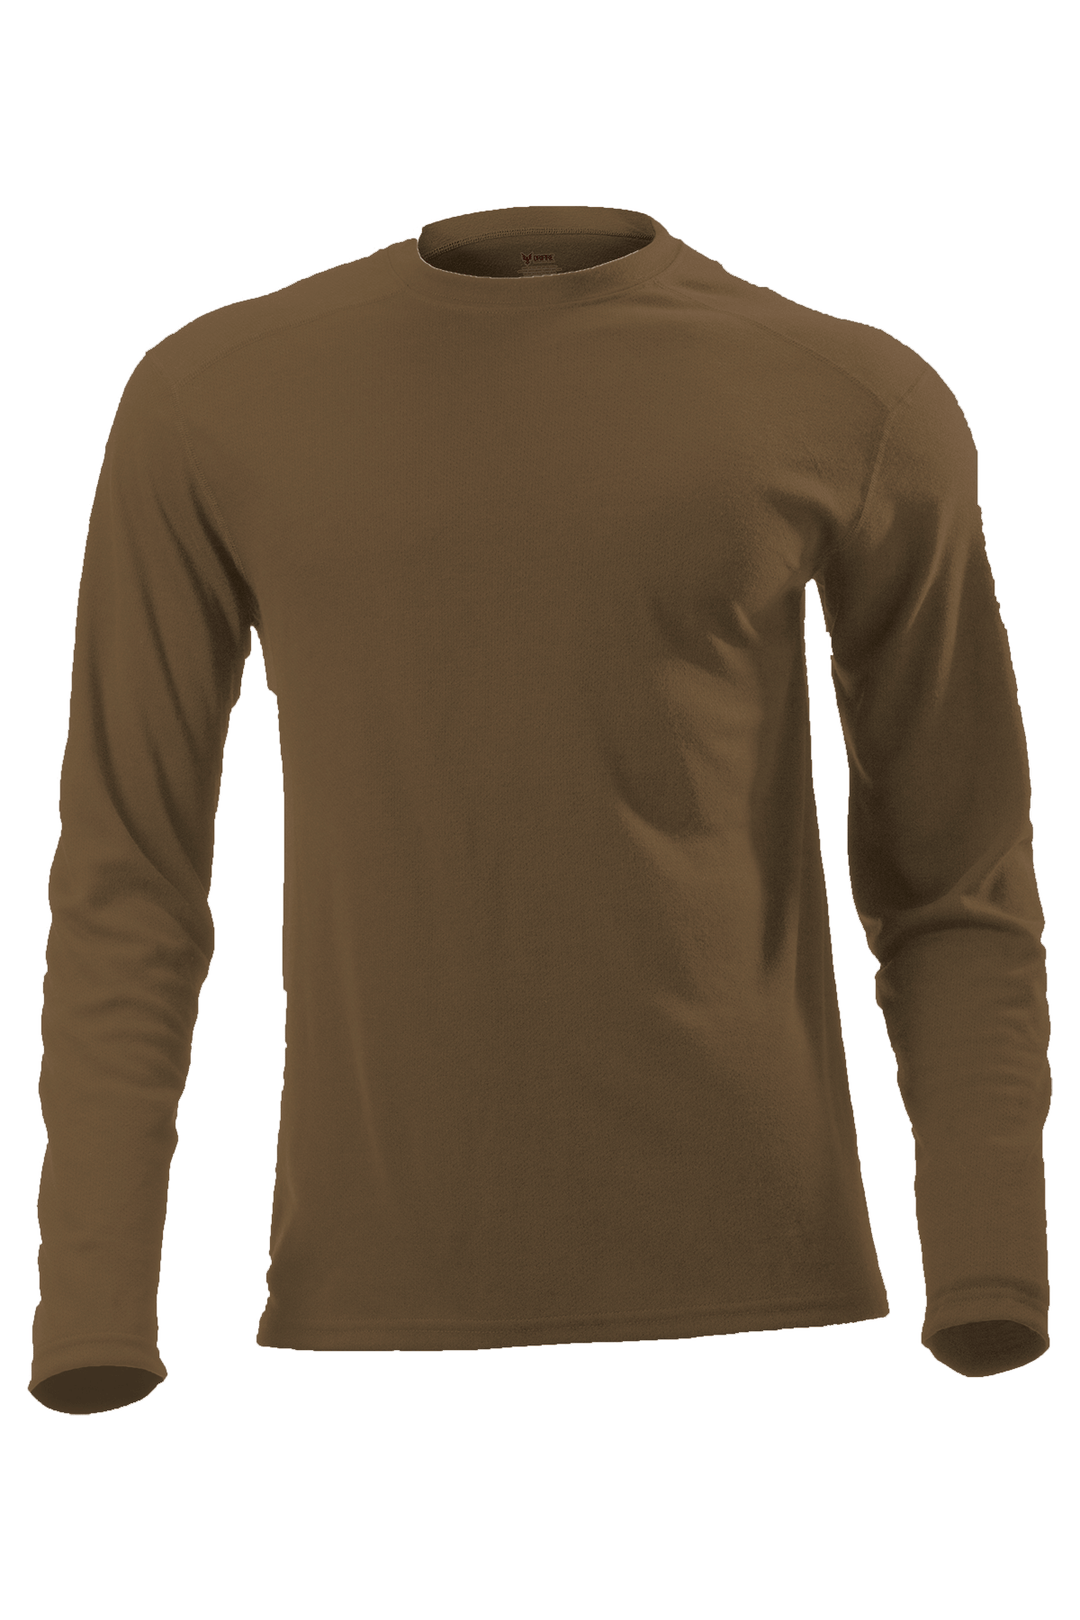 Apparel - Tops - Mid Layer - DRIFIRE Military Midweight FR Long Sleeve T-Shirt